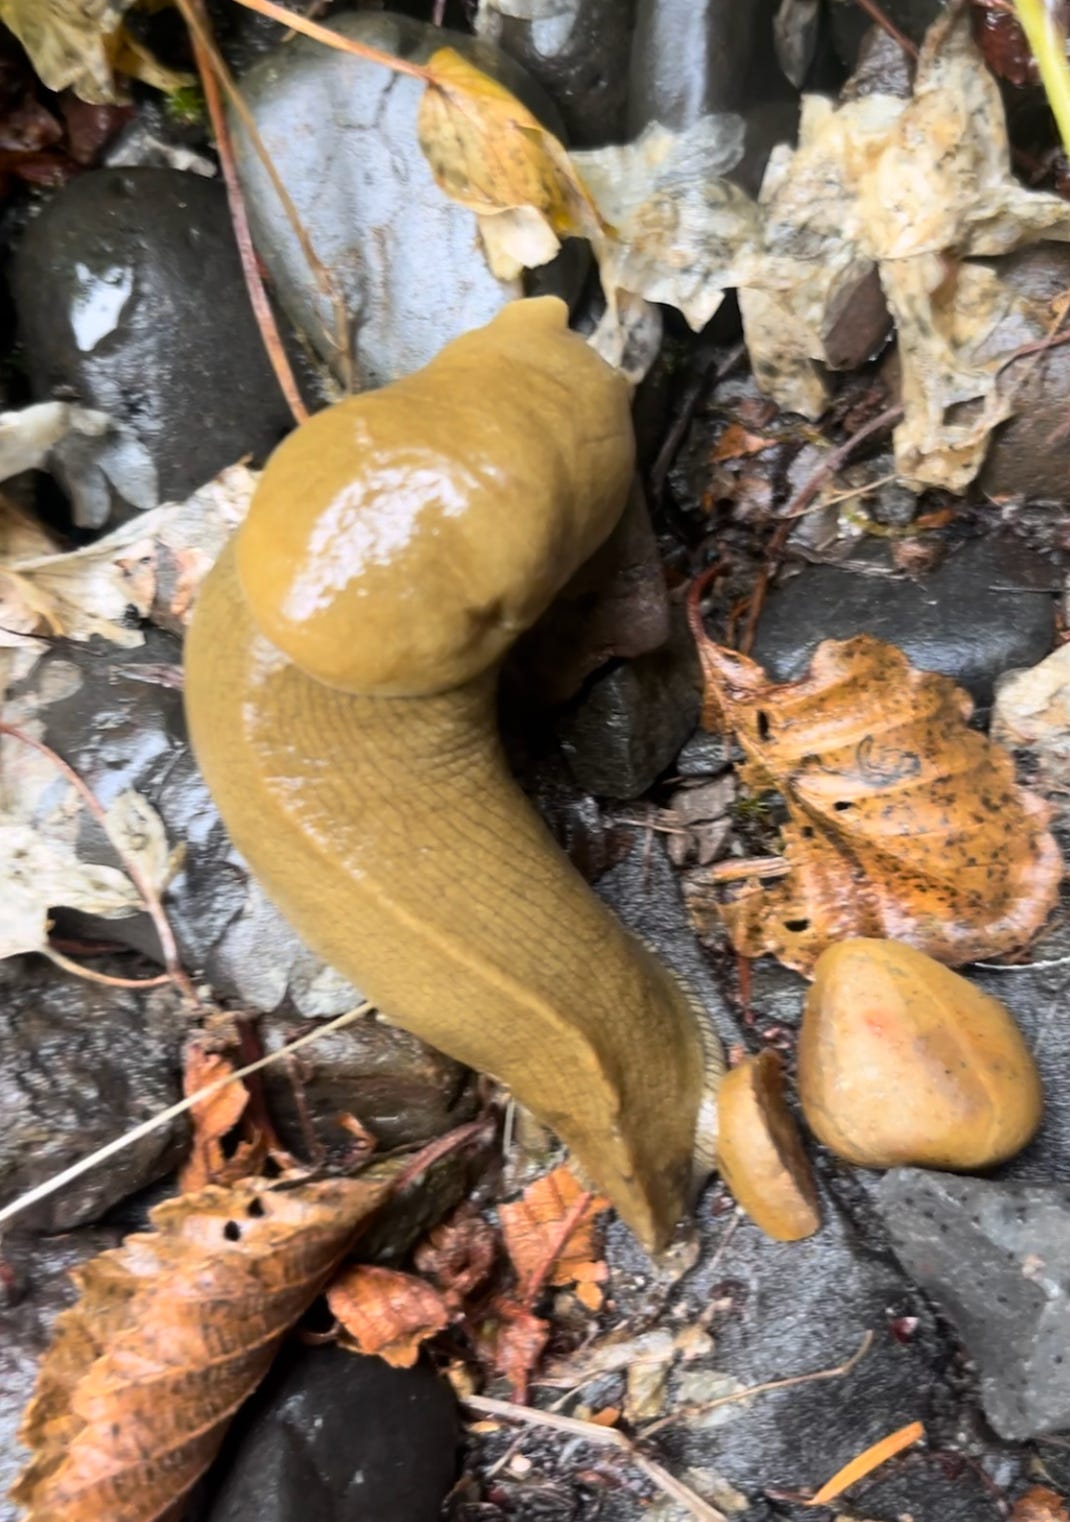 A large, mustard-colored banana slug in the dirt.